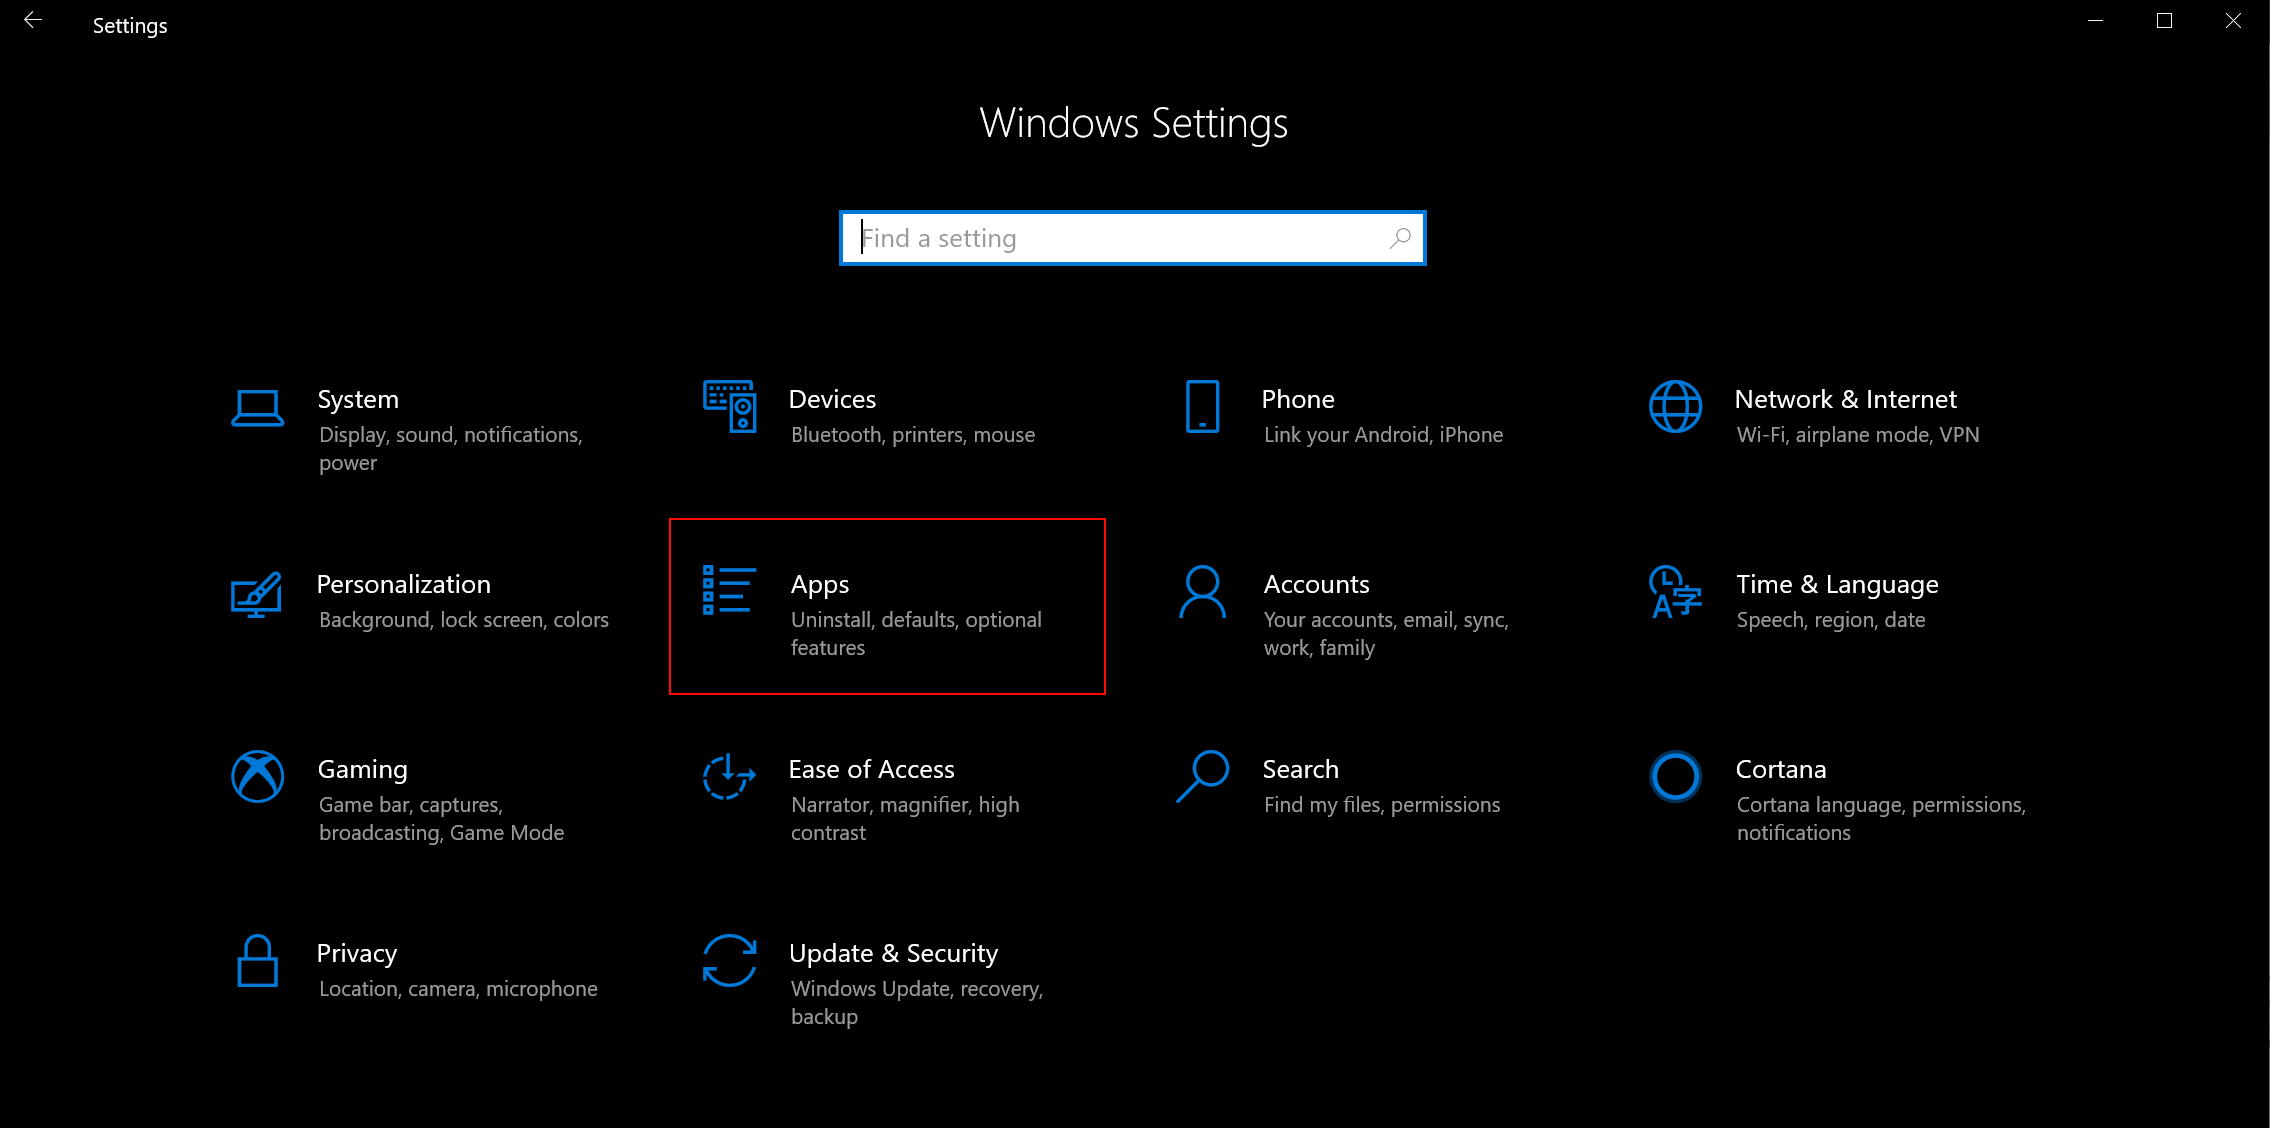 20191002-1-settings-windows10.png